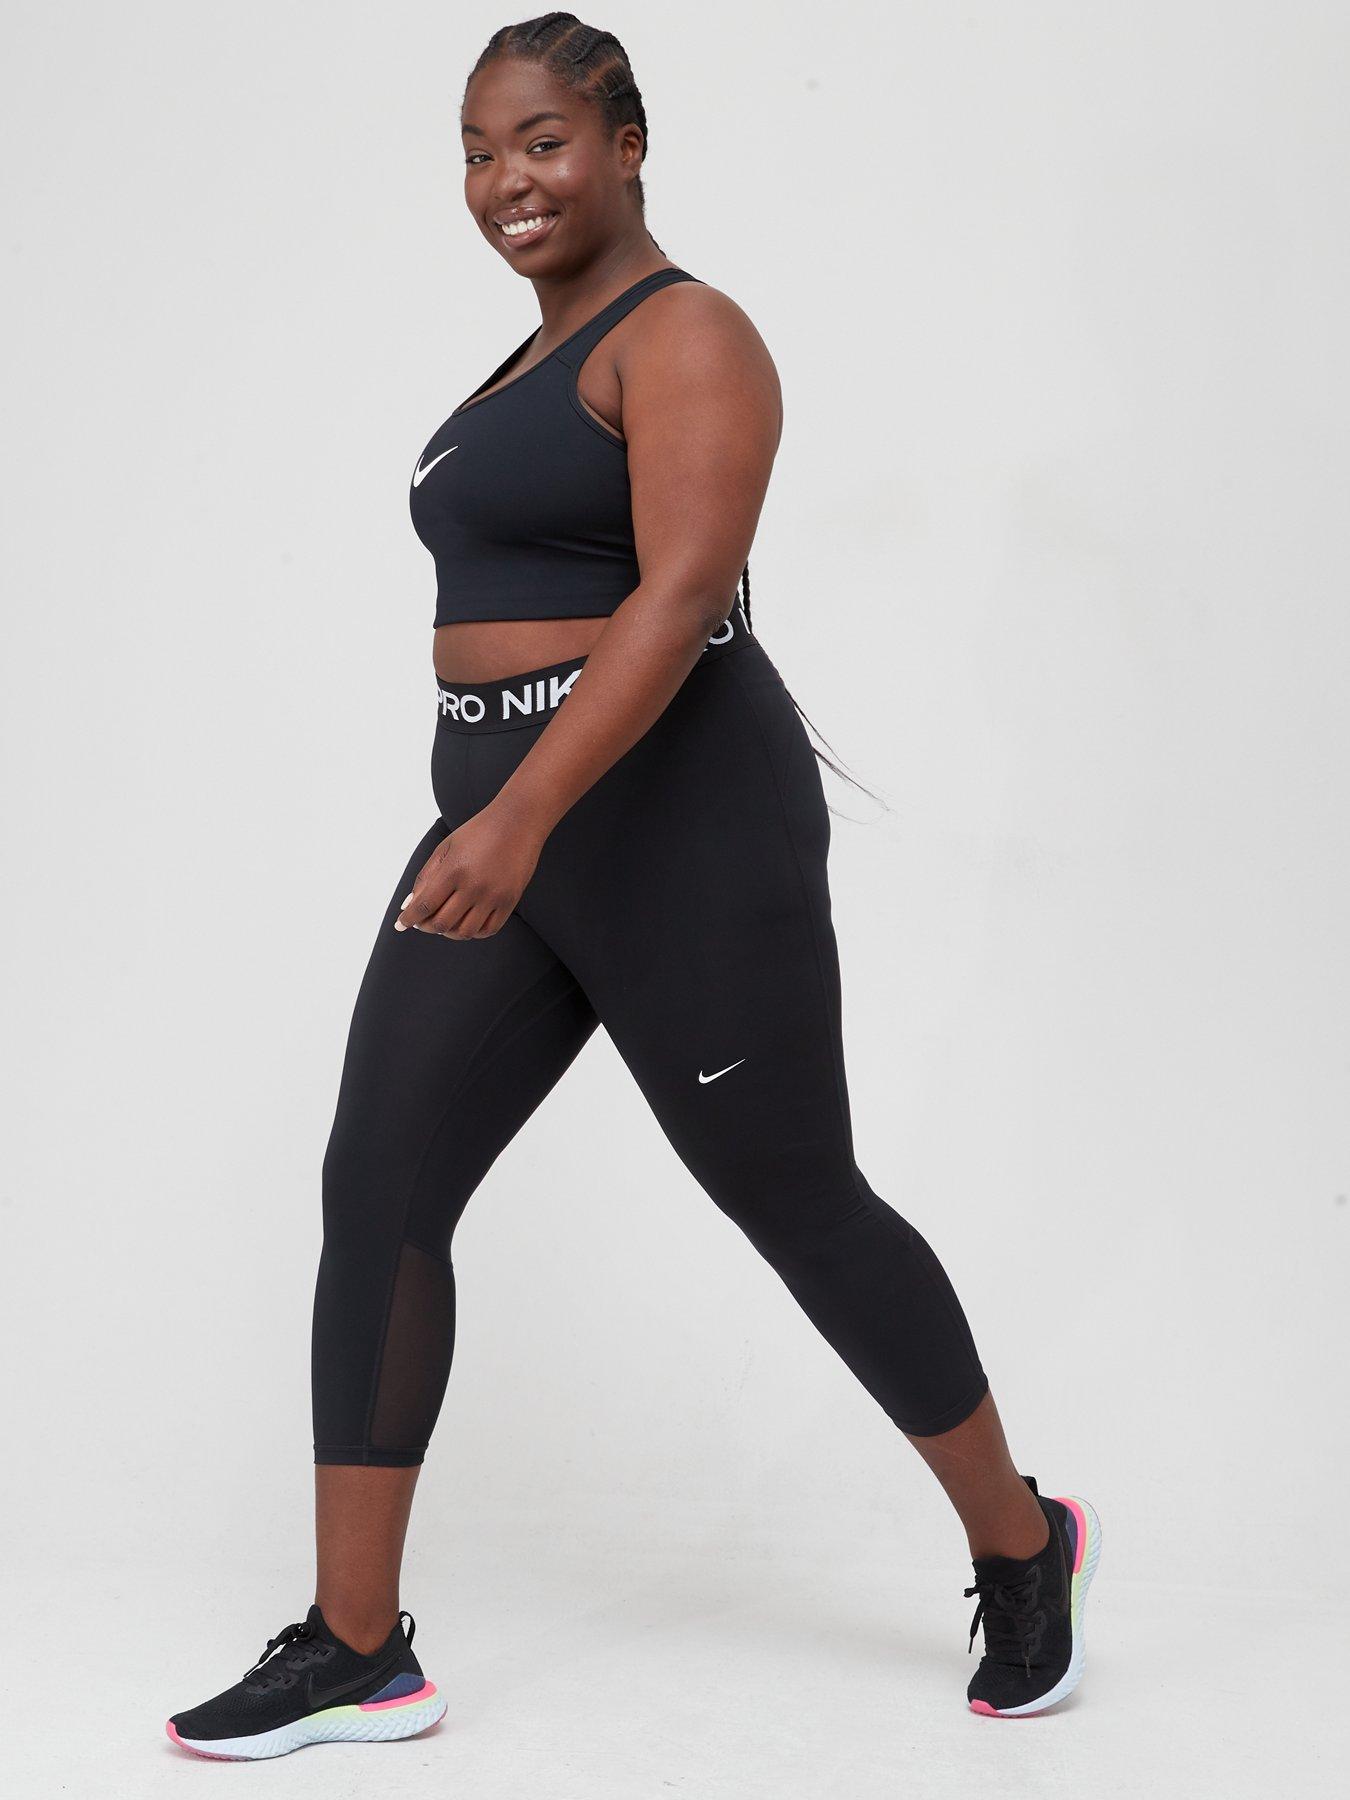 Nike Plus Size 1X 2X Women's High Rise FANCY Training Legging